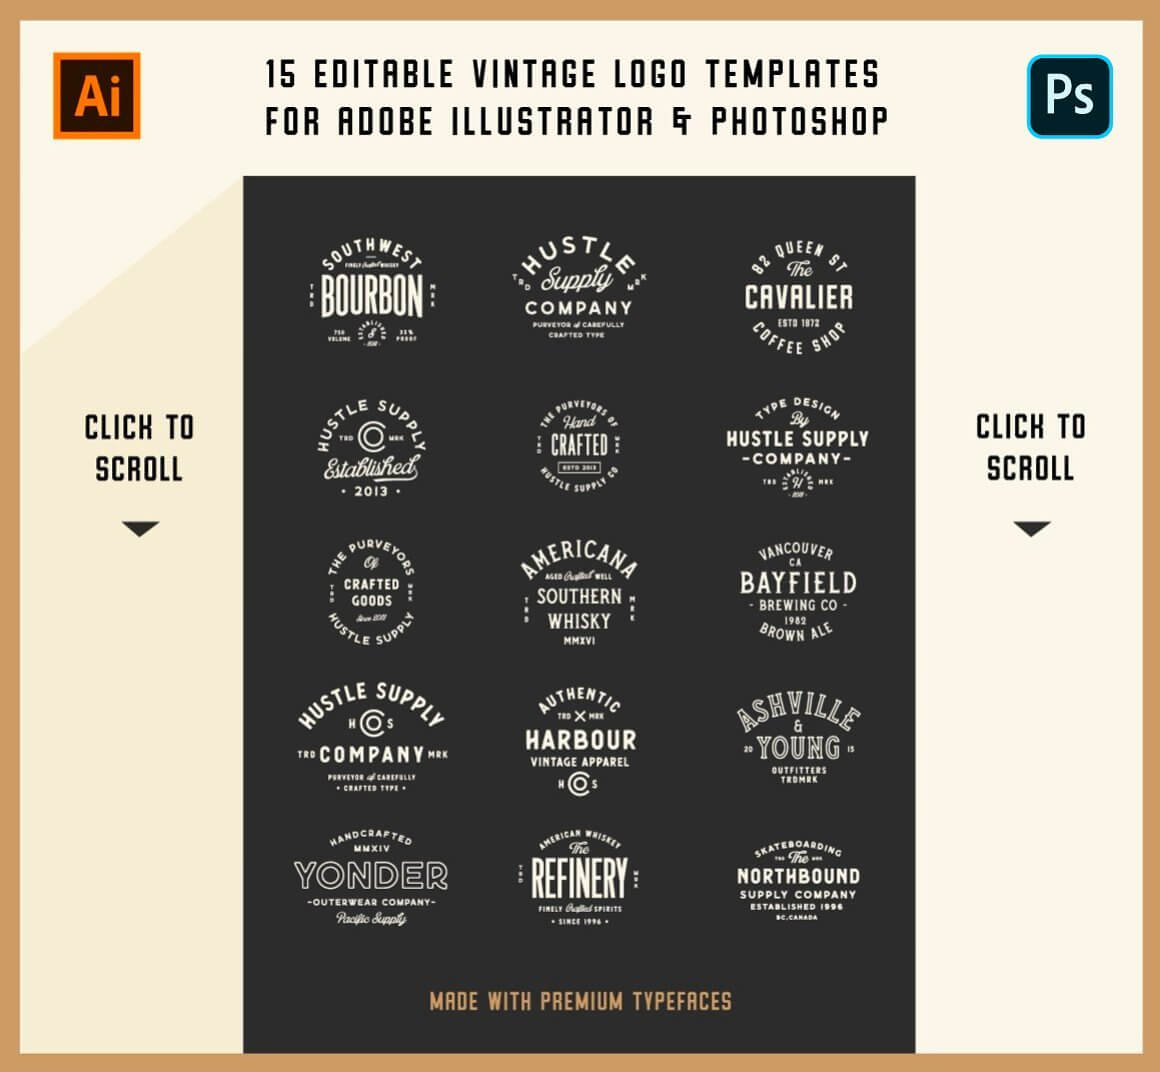 15 Editable Vintage Logo Templates for Adobe Illustrator & Photoshop.